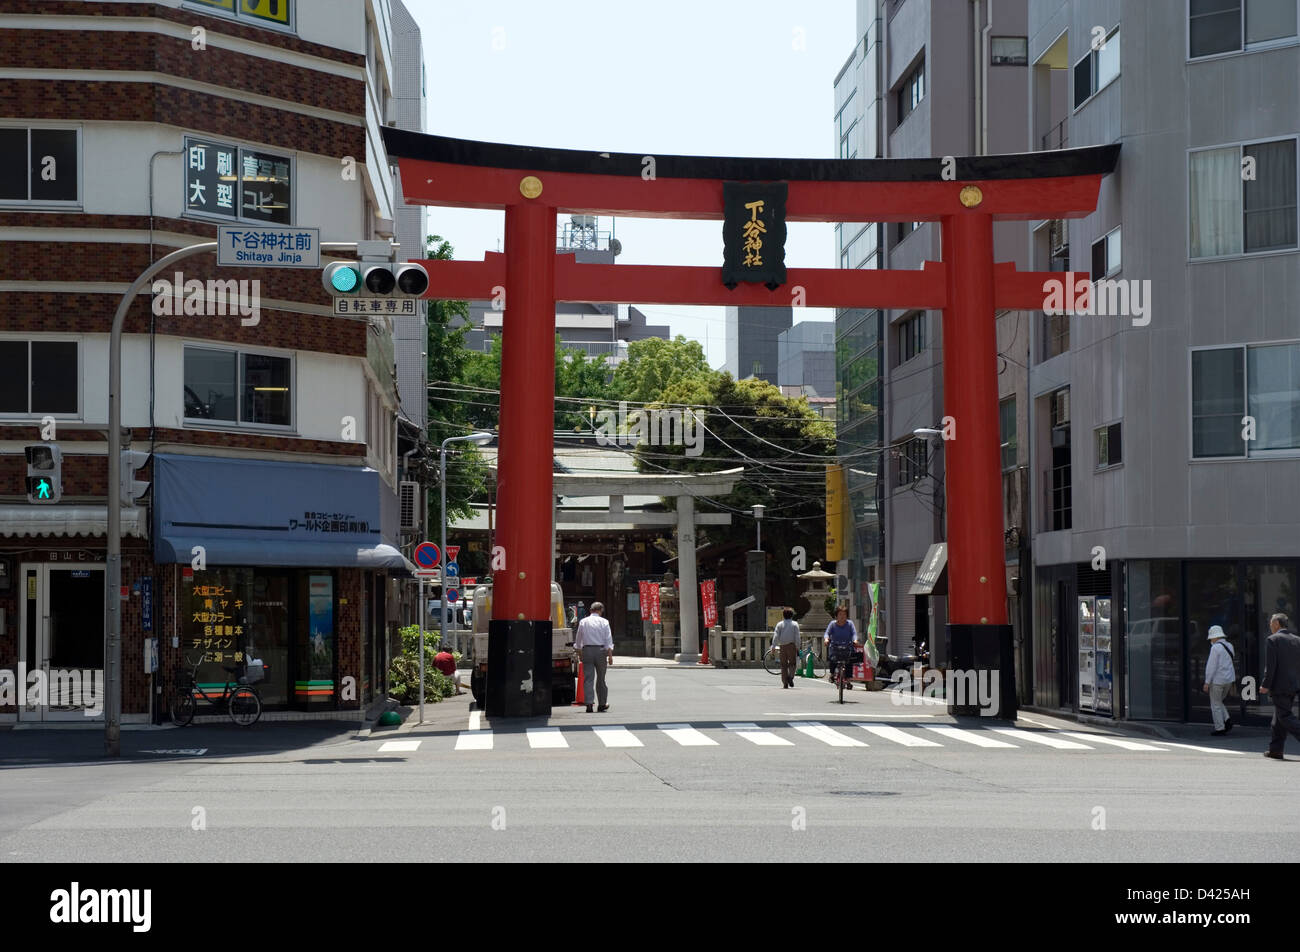 Large torii shrine gate squeezed between buildings marks the entrance to the neighborhood shrine Shitaya Jinja in Ueno, Tokyo Stock Photo